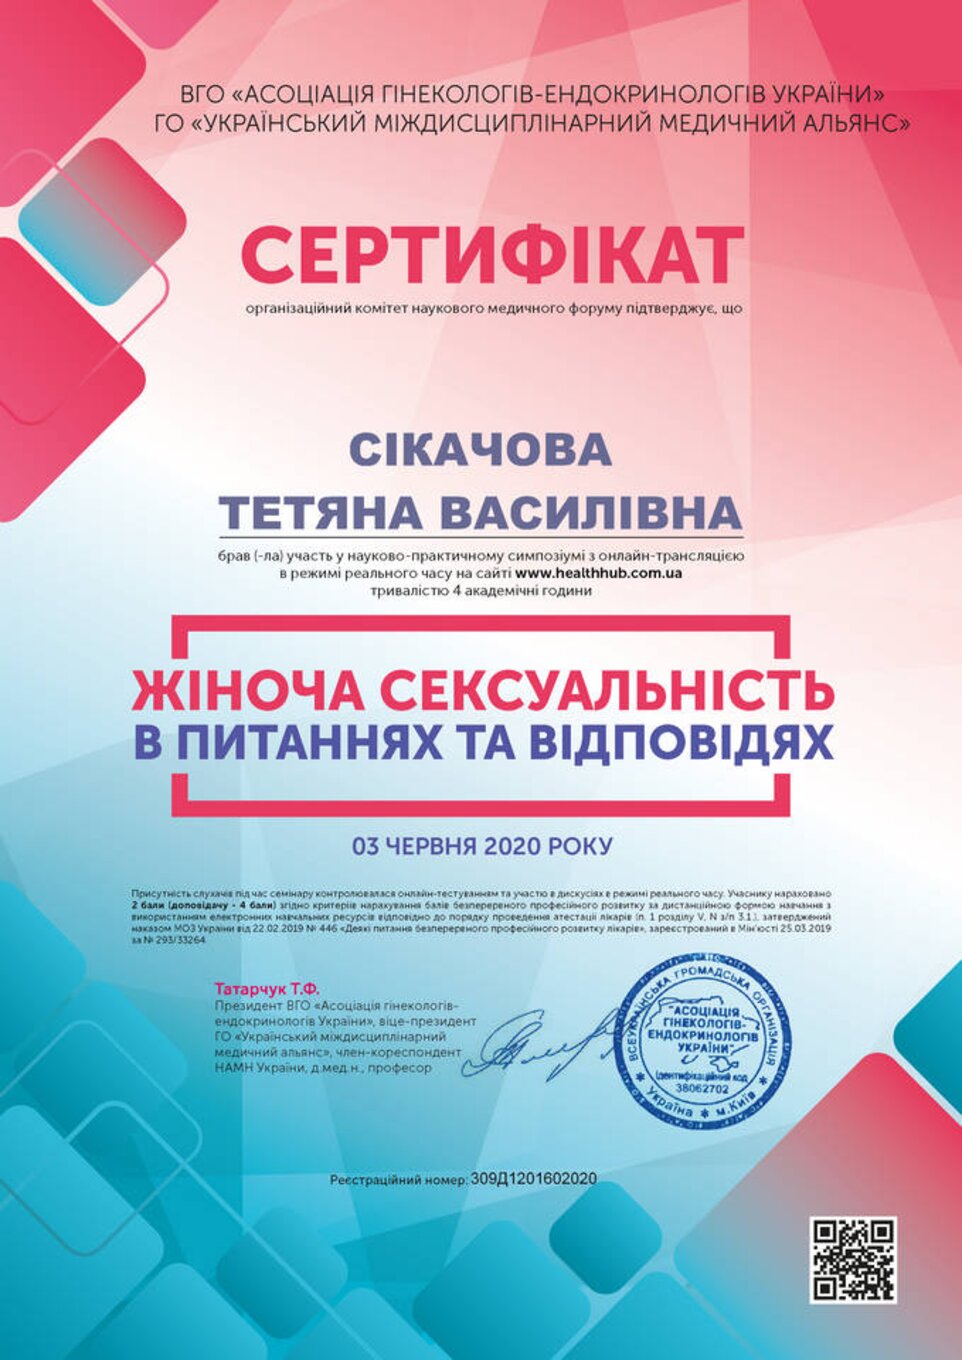 certificates/cikachova-tetyana-vasilivna/erc-sikacheva-cert-29.jpg